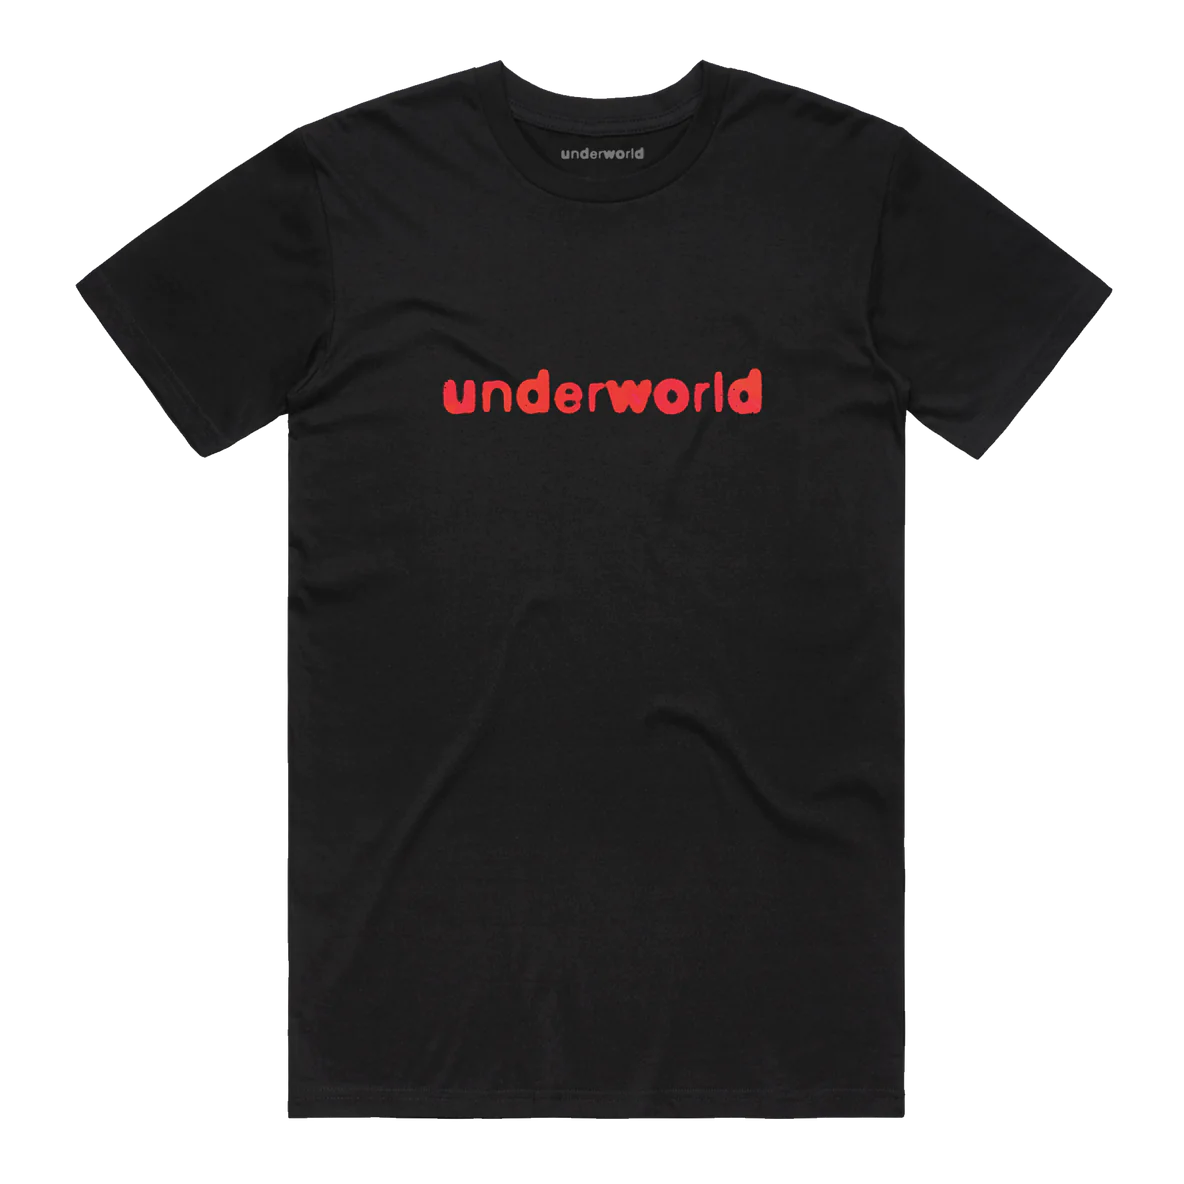 Underworld - Black Tee